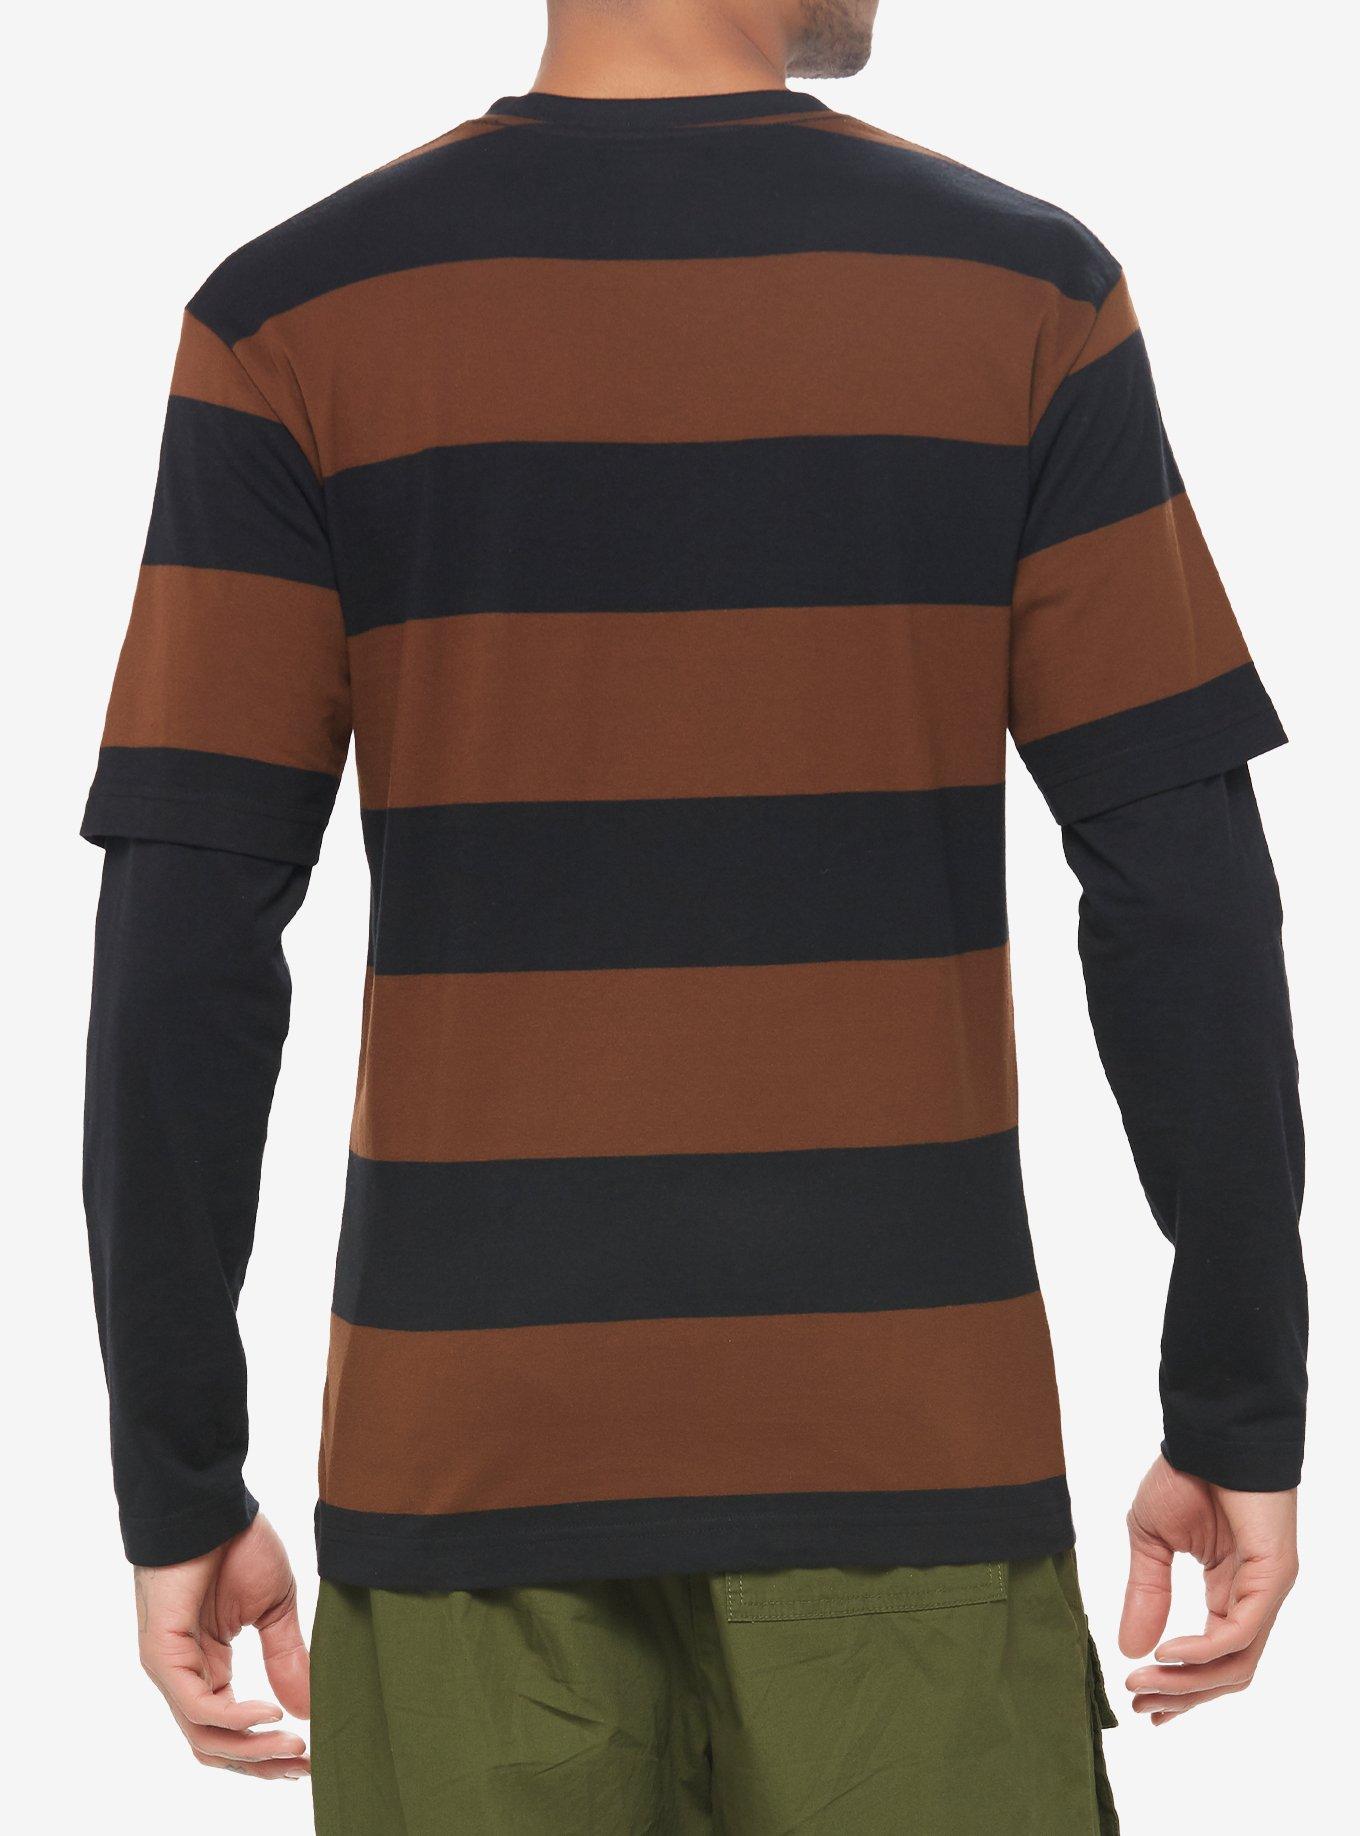 Black & Brown Stripe Twofer Long-Sleeve T-Shirt, BROWN, alternate